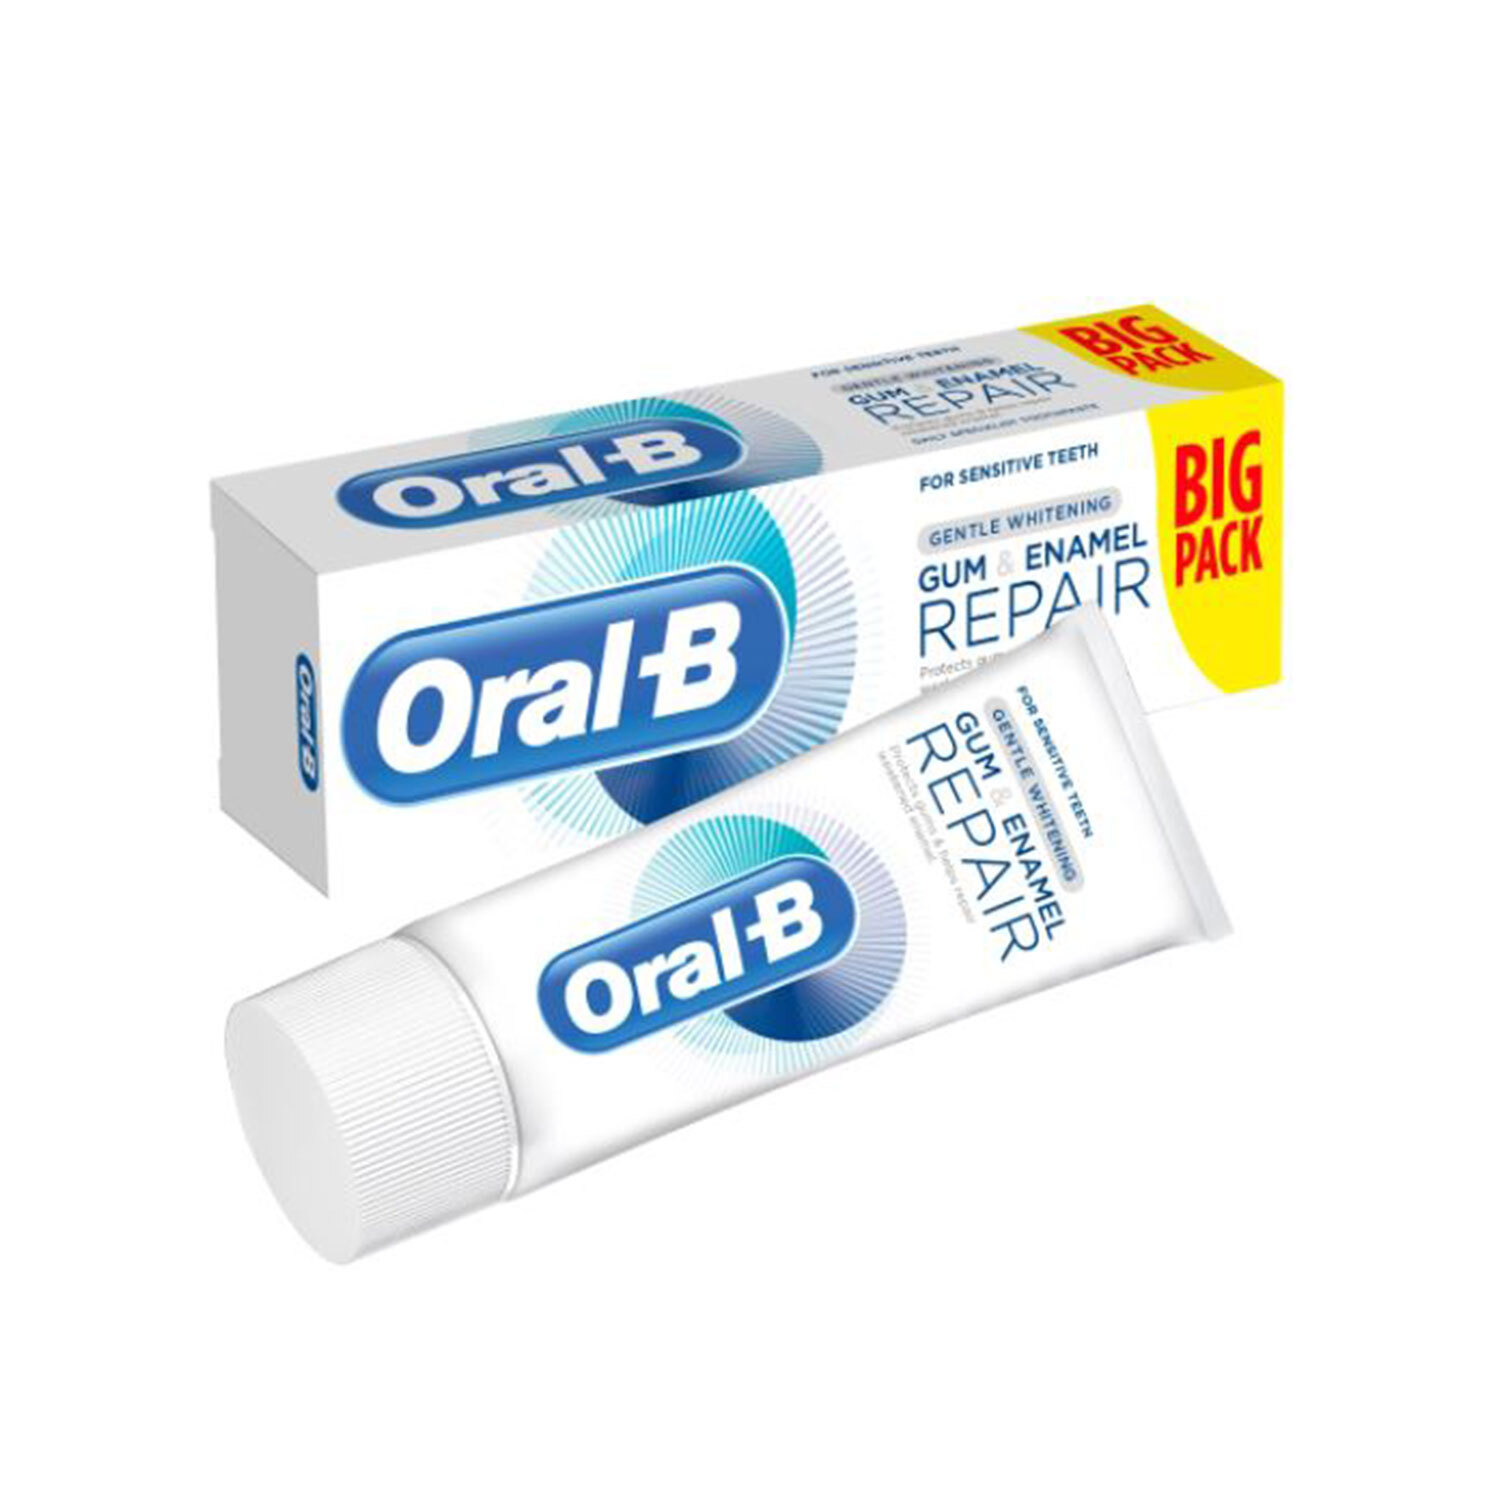 Oral-B Gum and Enamel Repair Gentle Whitening Toothpaste Image